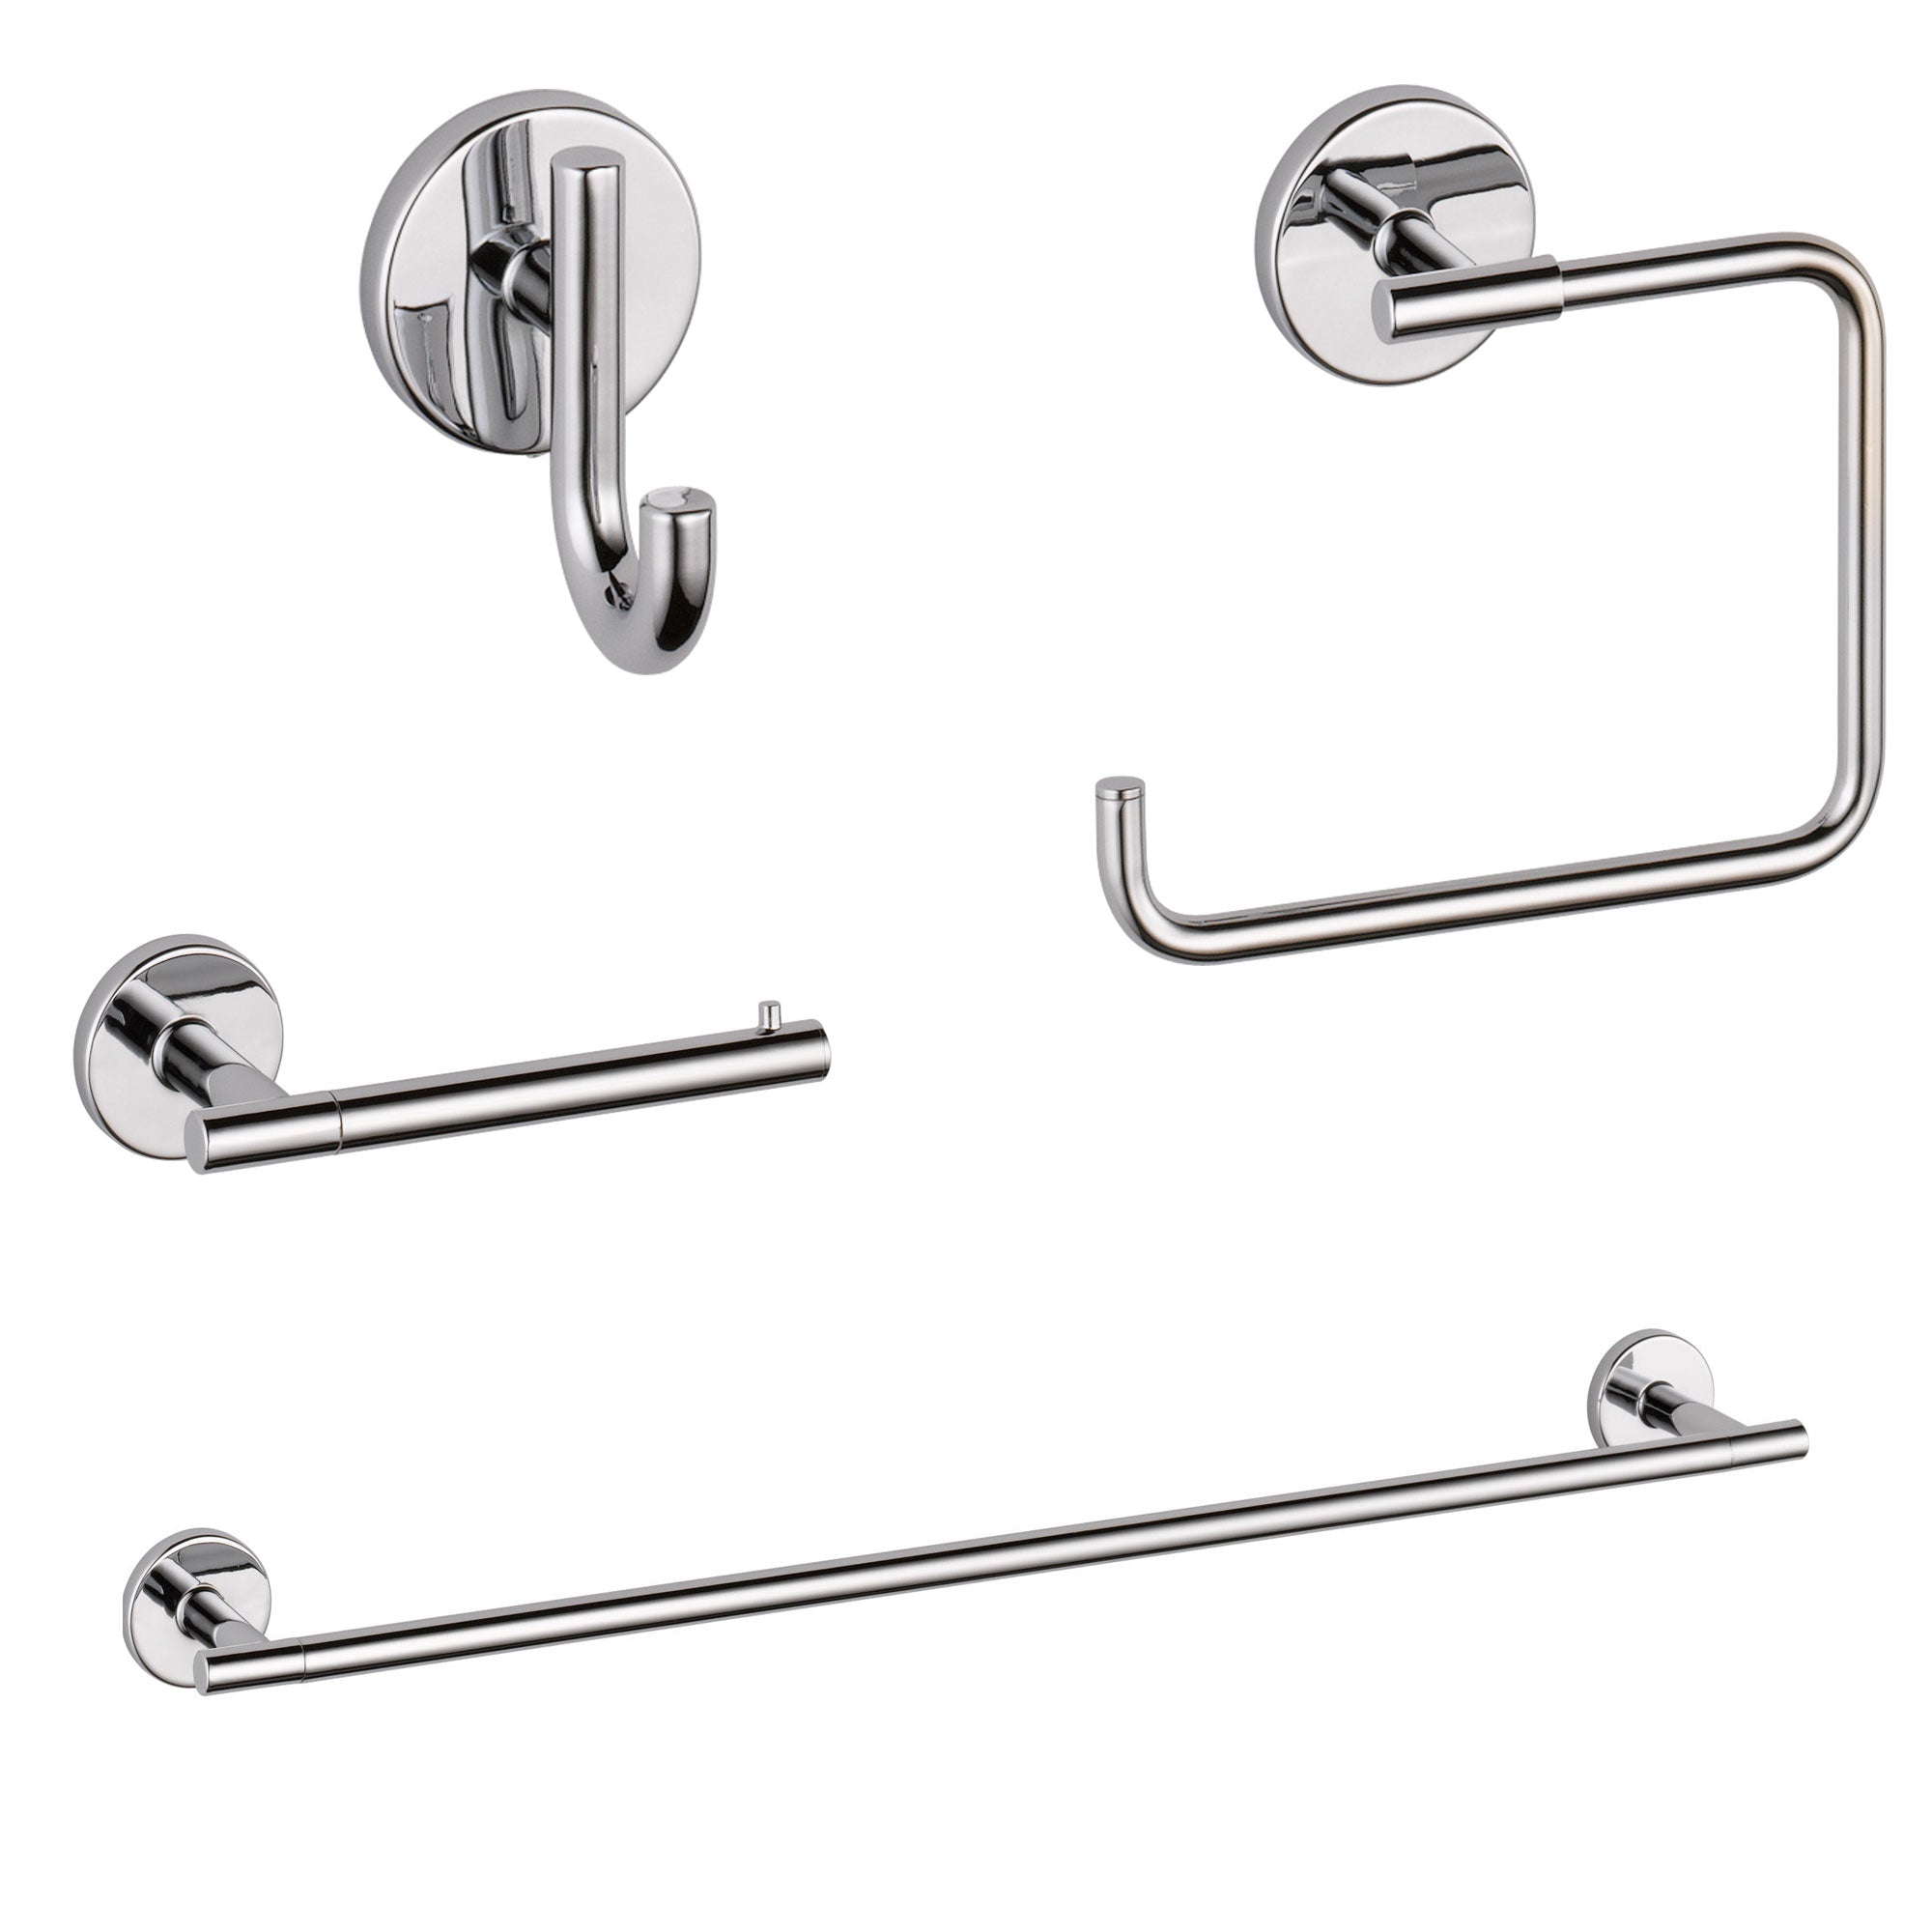 Delta Trinsic Chrome STANDARD Bathroom Accessory Set Includes: 24" Towel Bar, Toilet Paper Holder, Robe Hook, and Towel Ring D10002AP